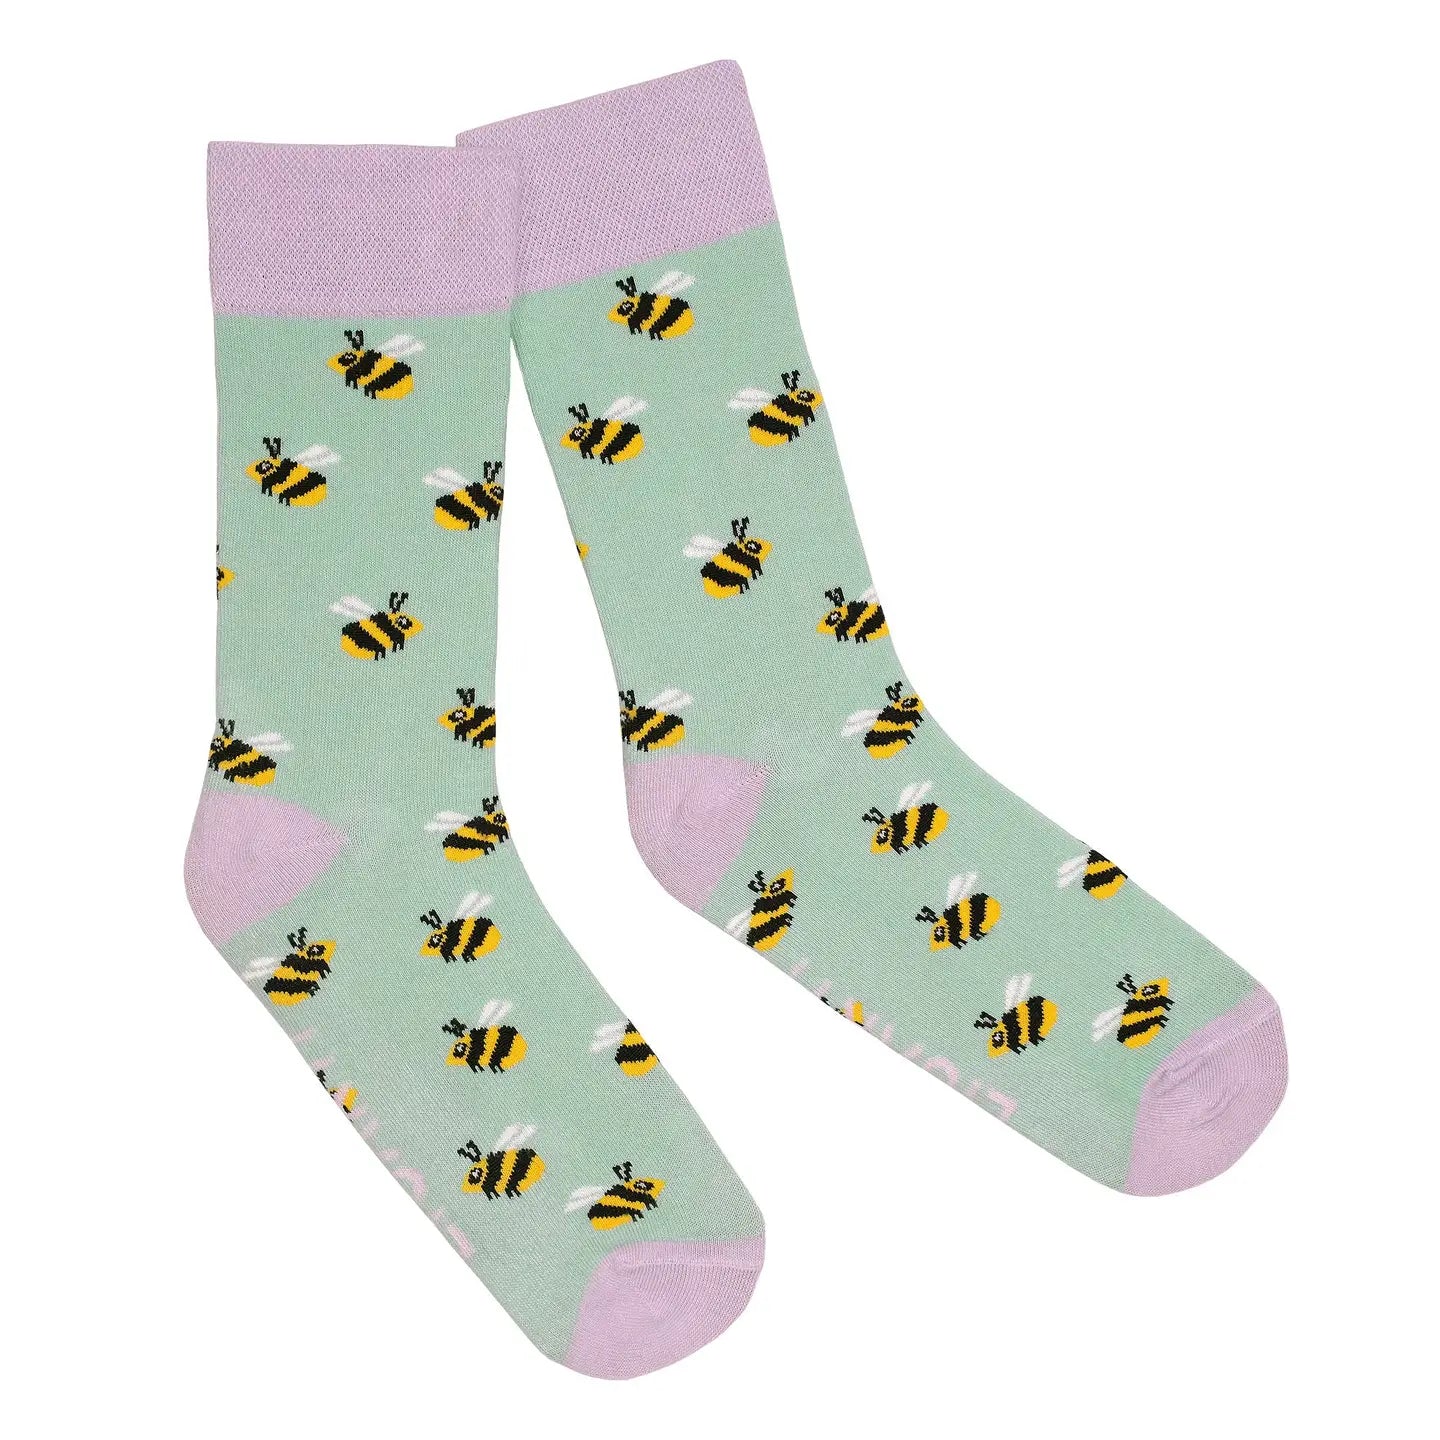 Bee Swarm socks